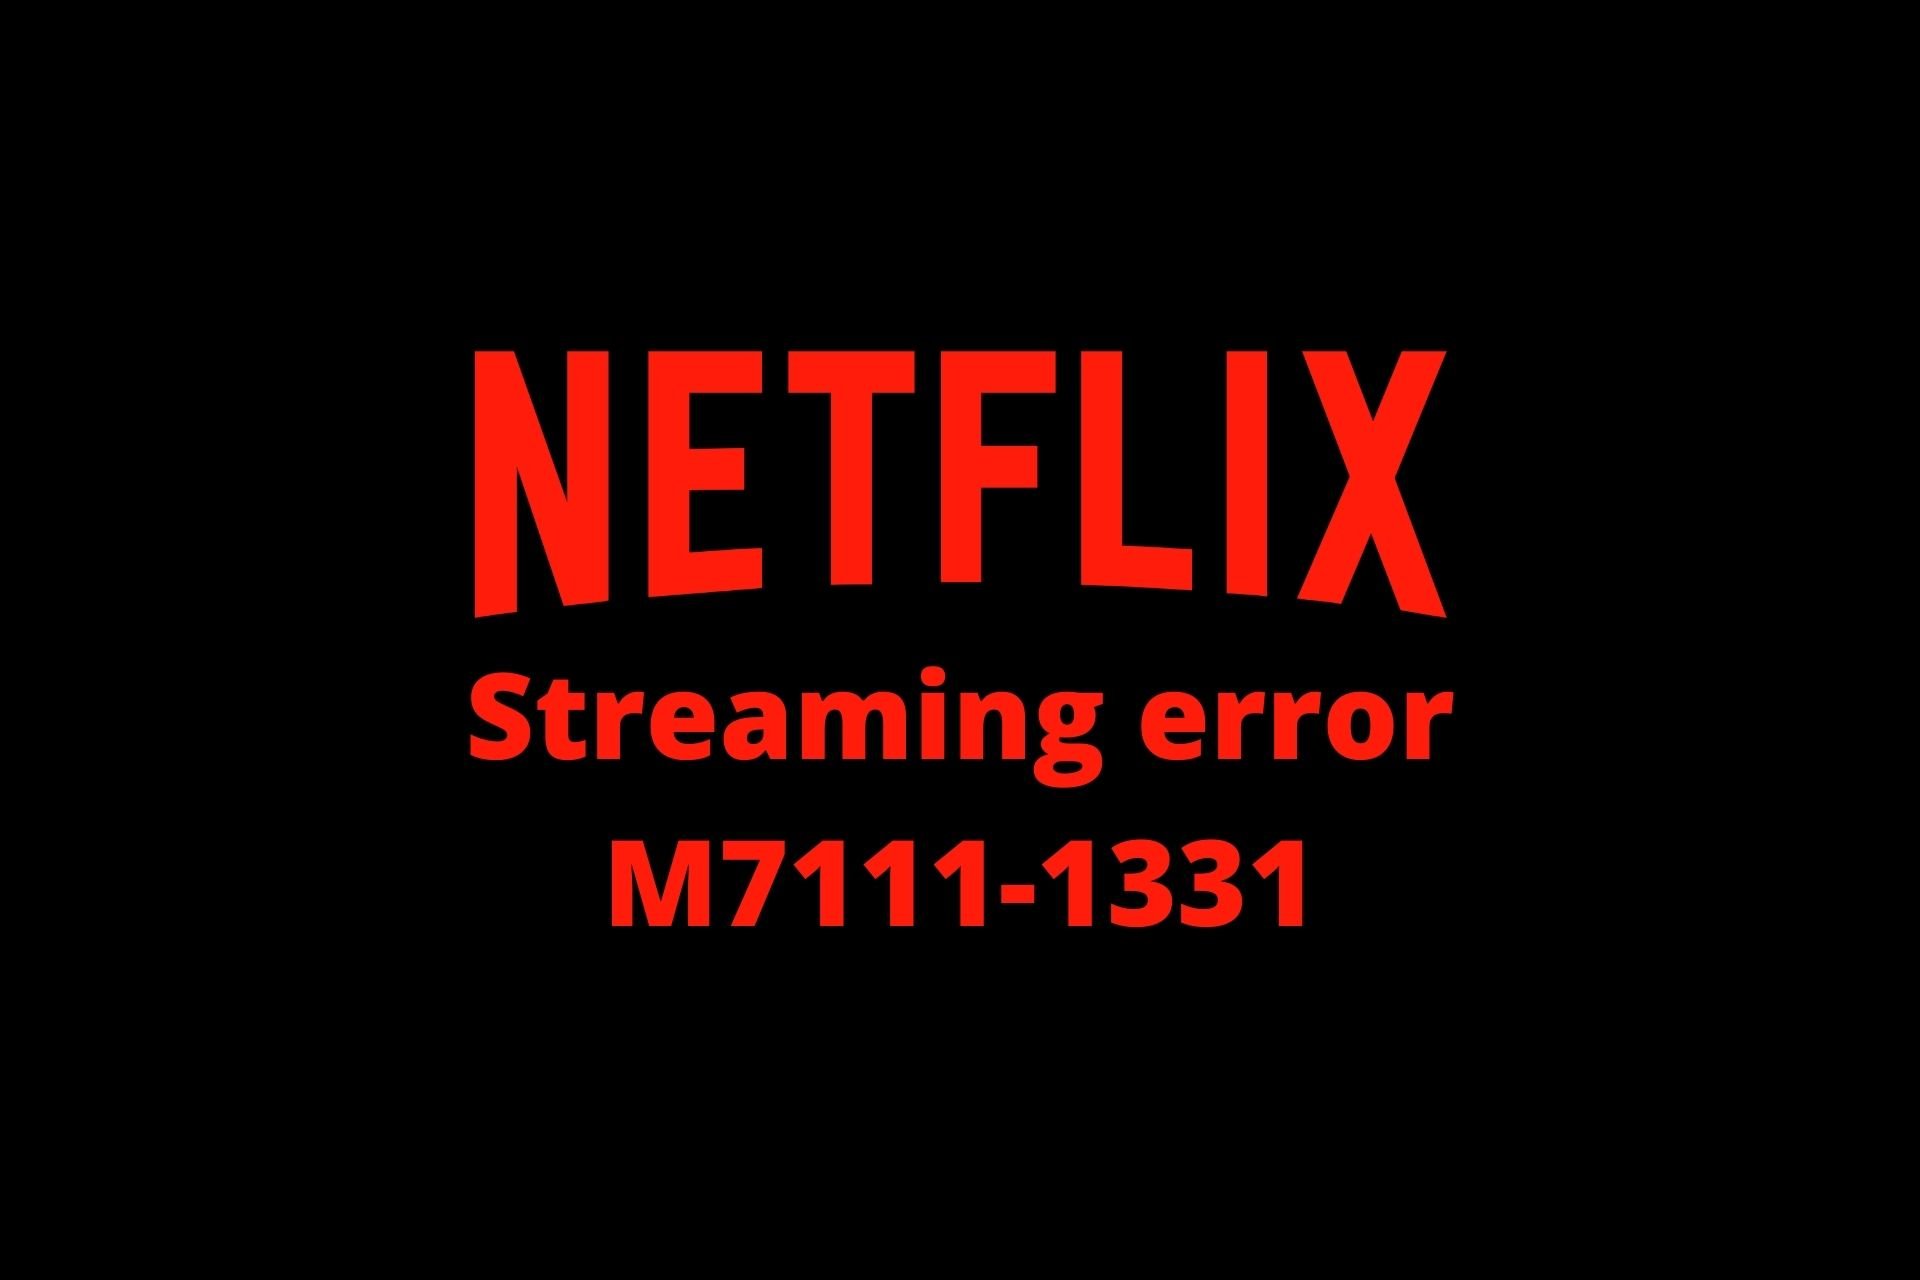 Netflix Streaming error M7111-1331